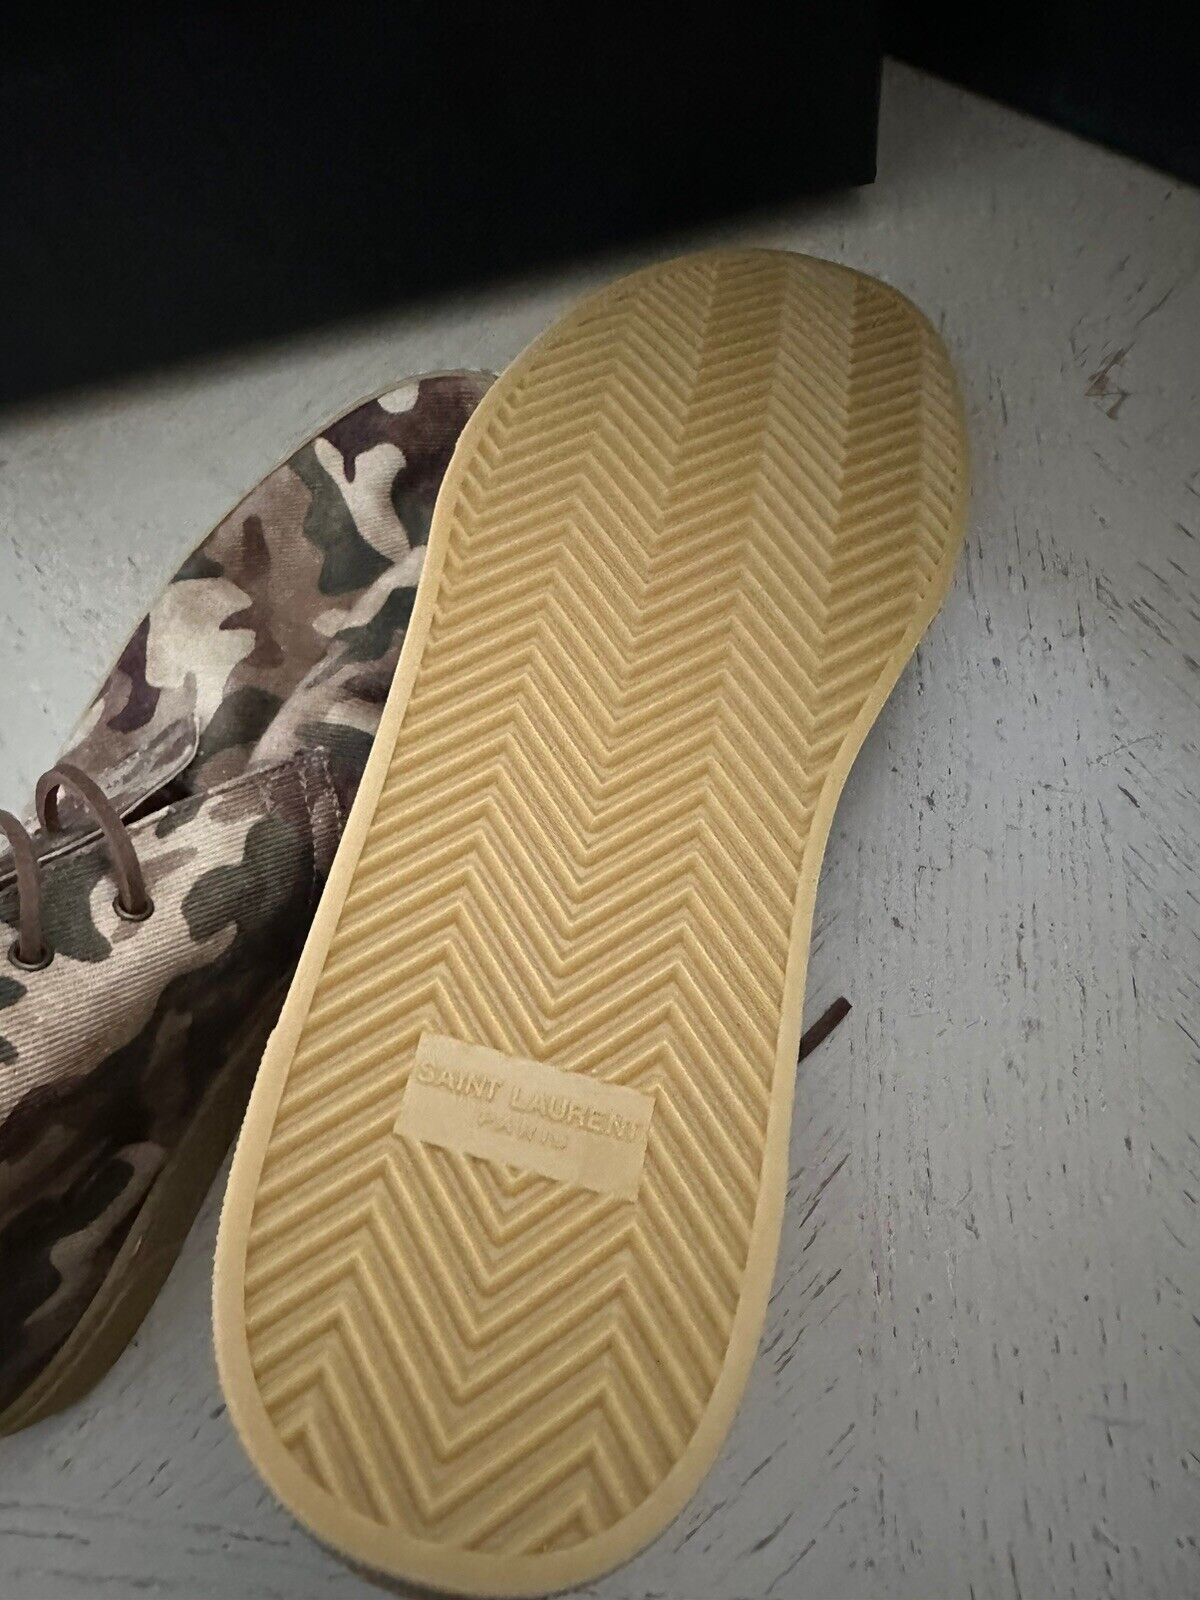 NIB Saint Laurent Men Canvas Camouflage Menphis Sneakers Green/Mul 9.5 US/42.5 E